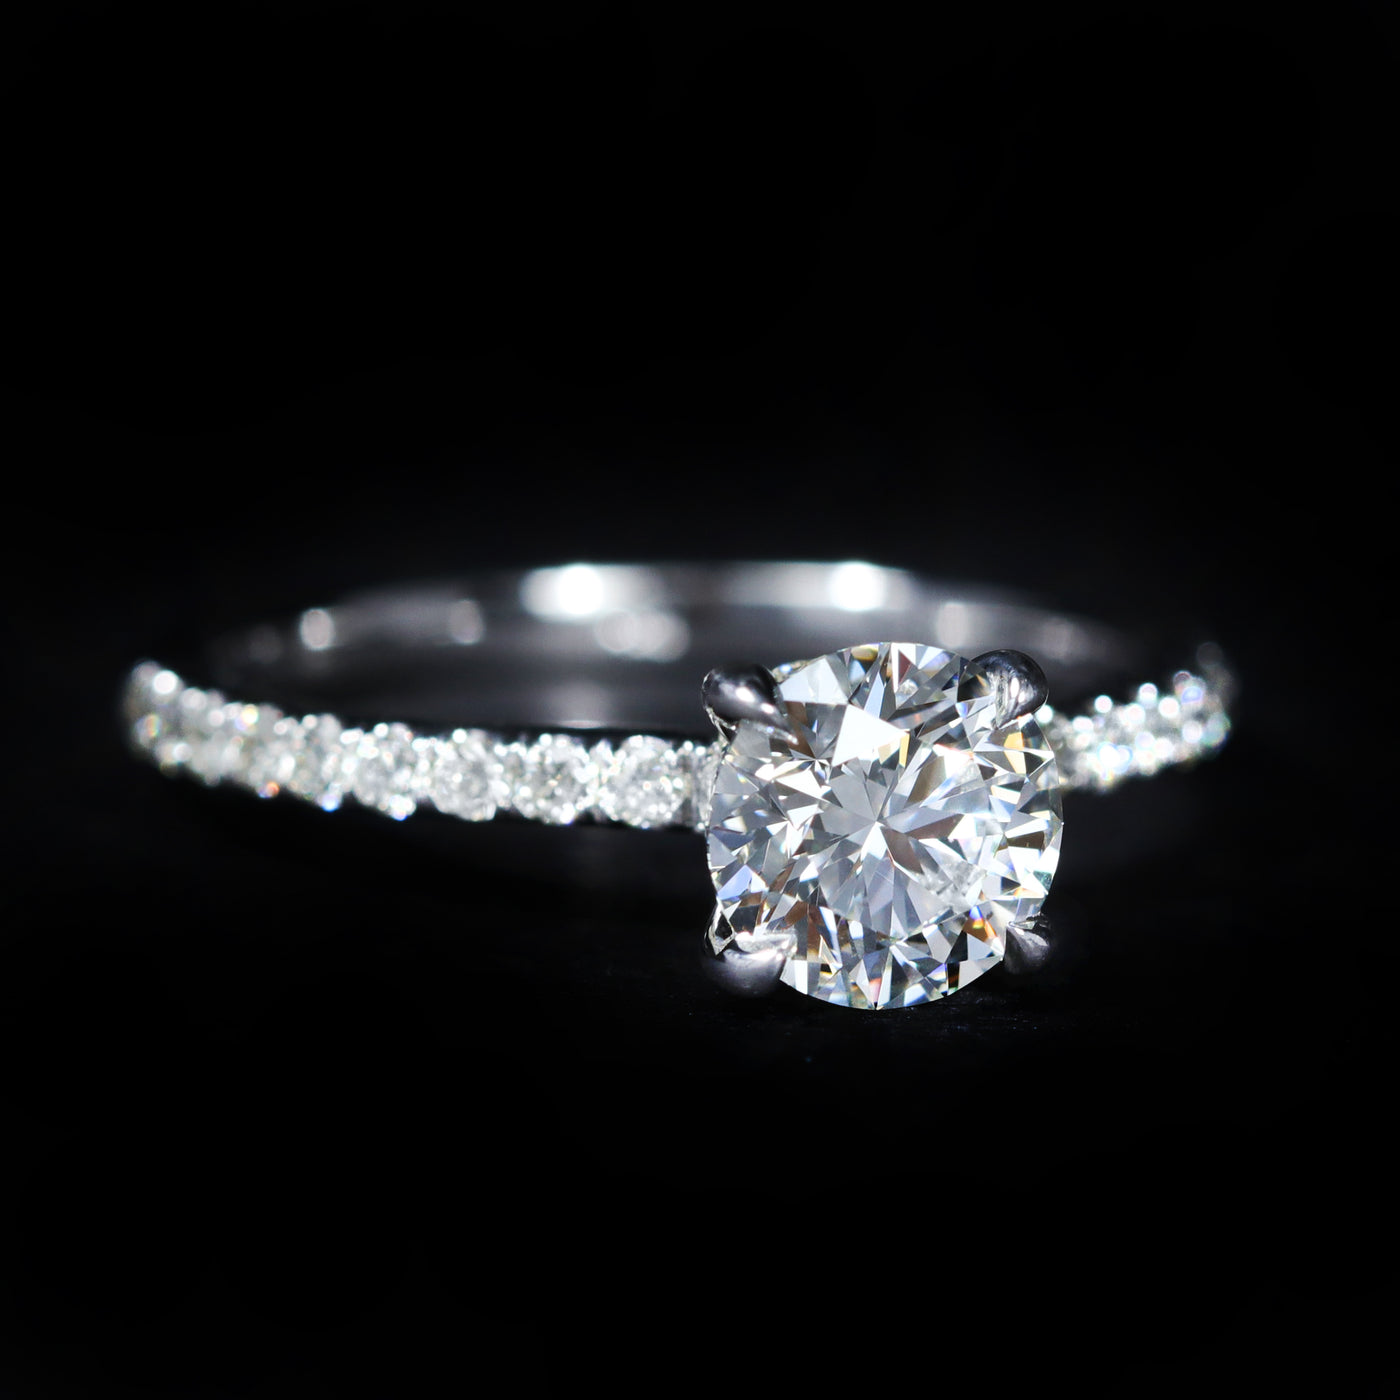 14K White Gold GIA 1.08 Carat Round Brilliant Cut Diamond Solitaire Engagement Ring